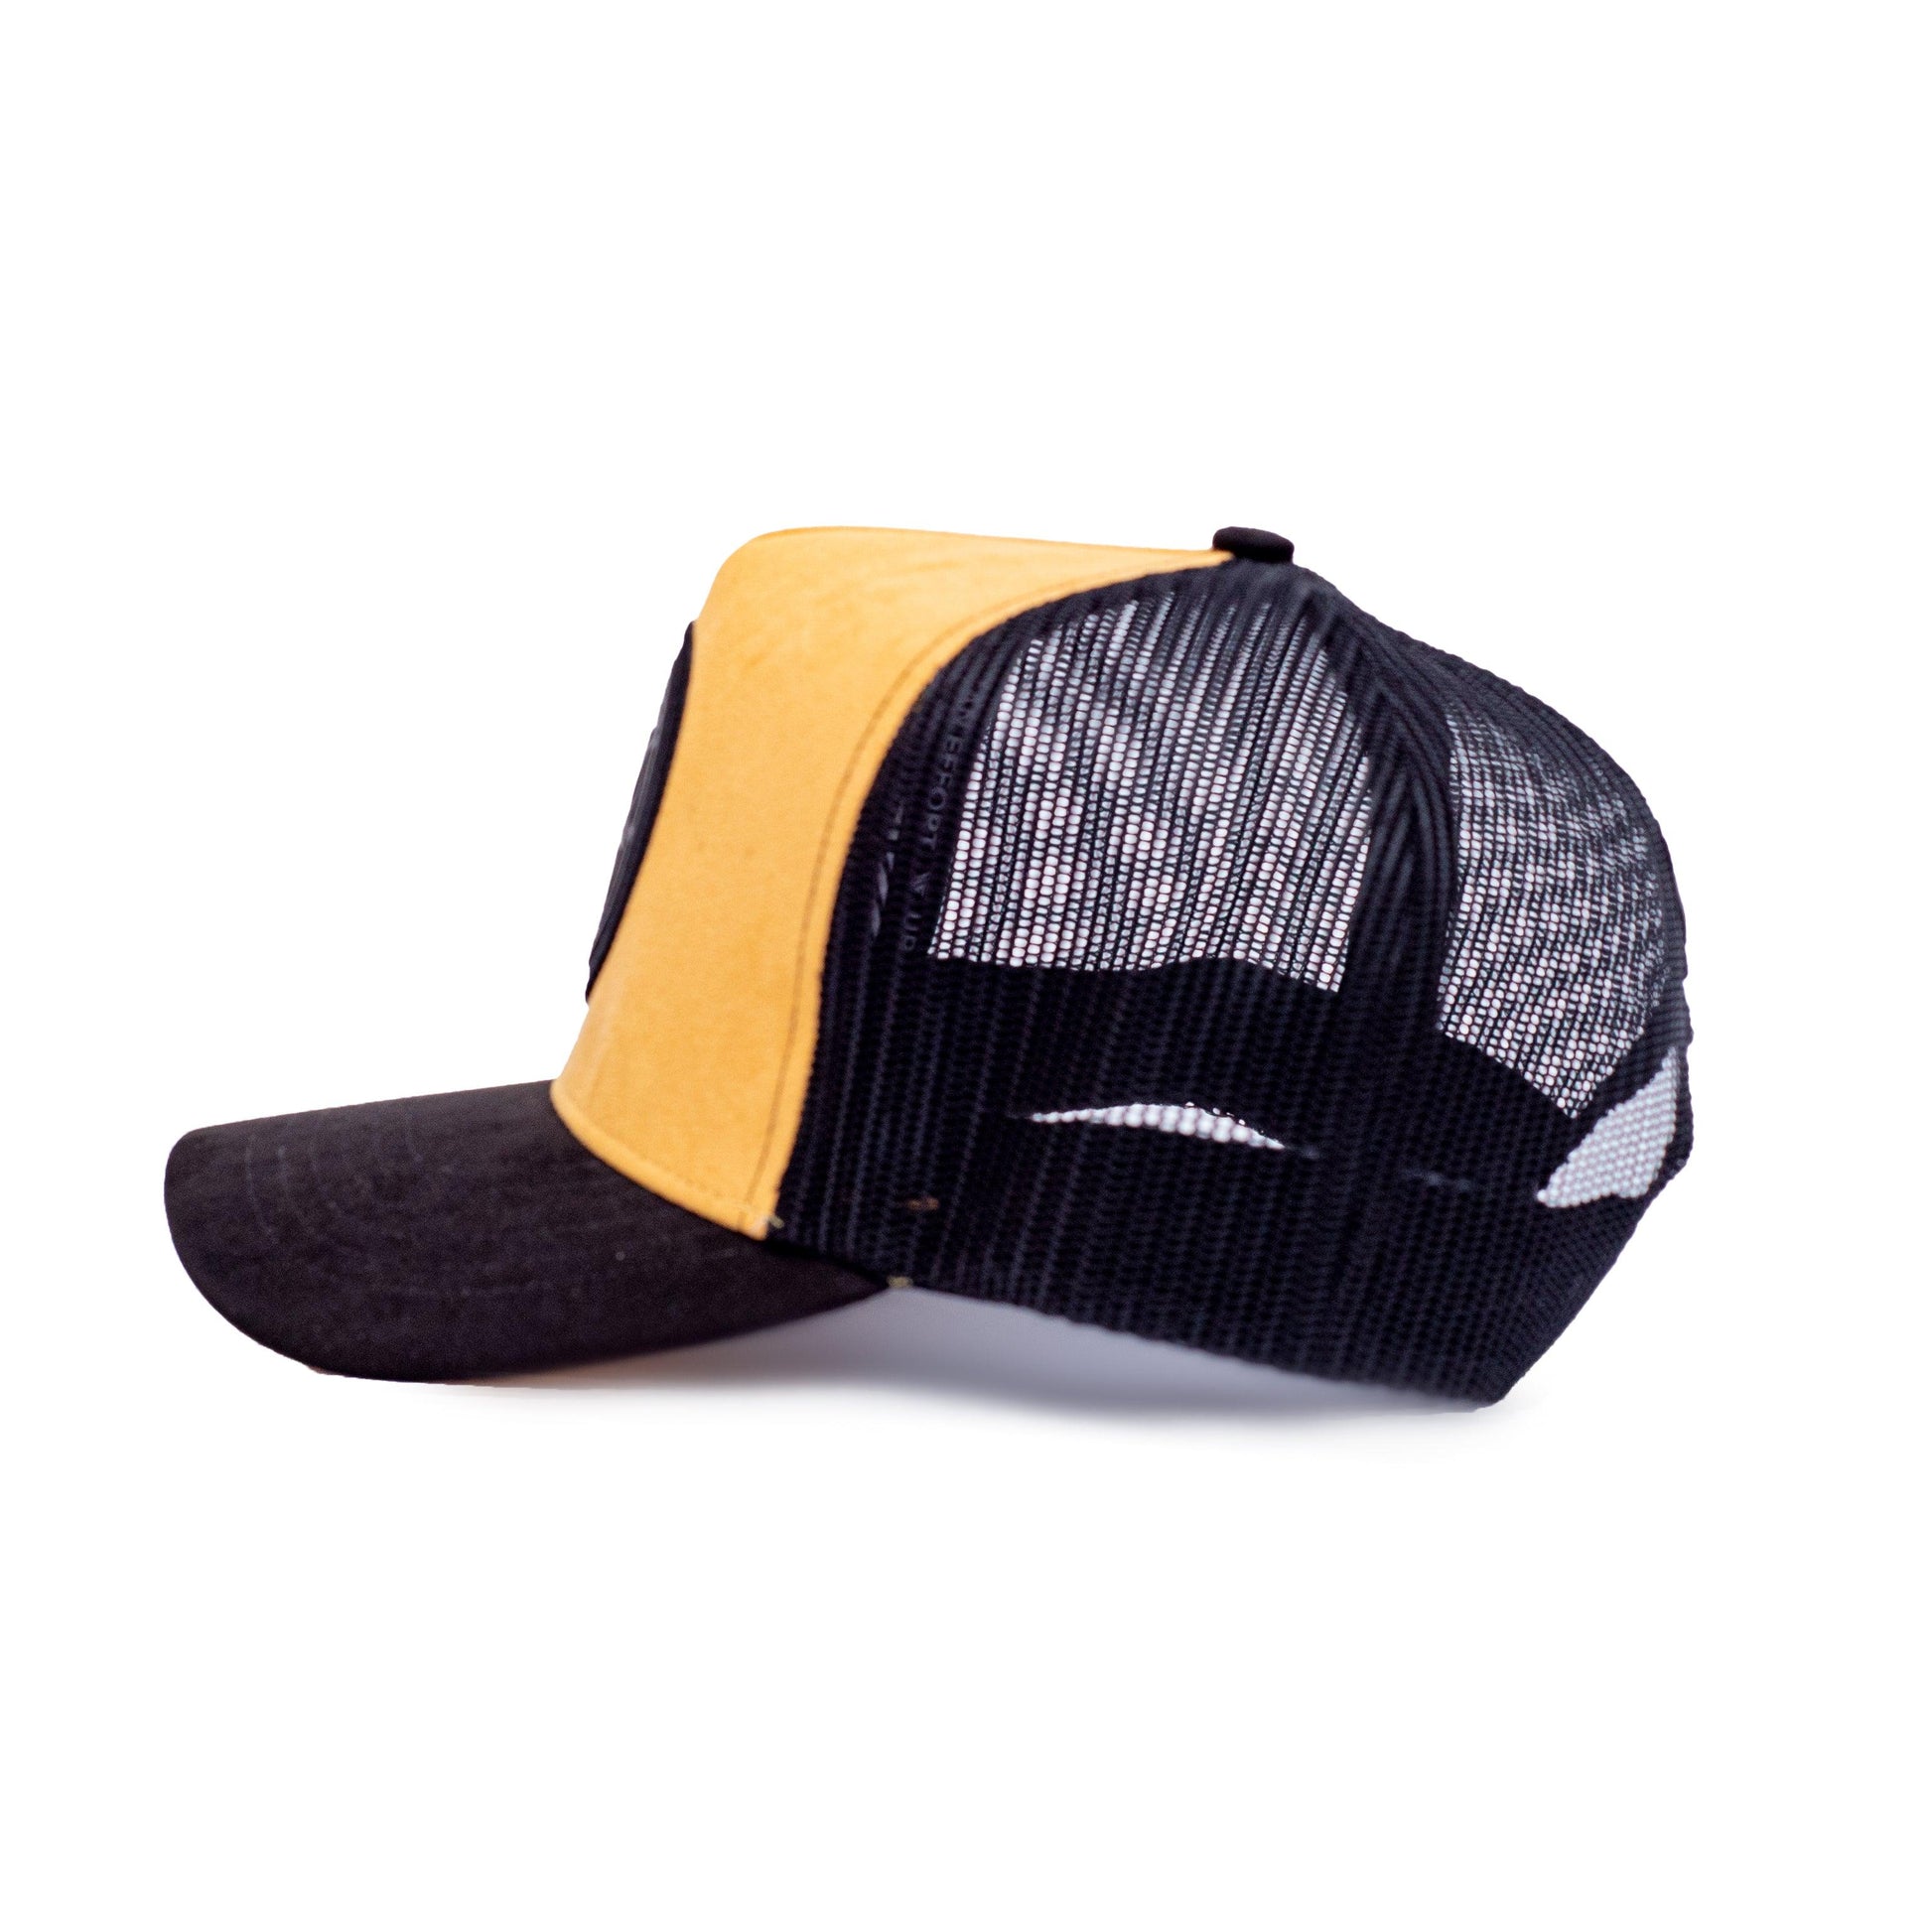 Black + Gold Trucker Hat | Original's | Urban Effort - Urban Effort